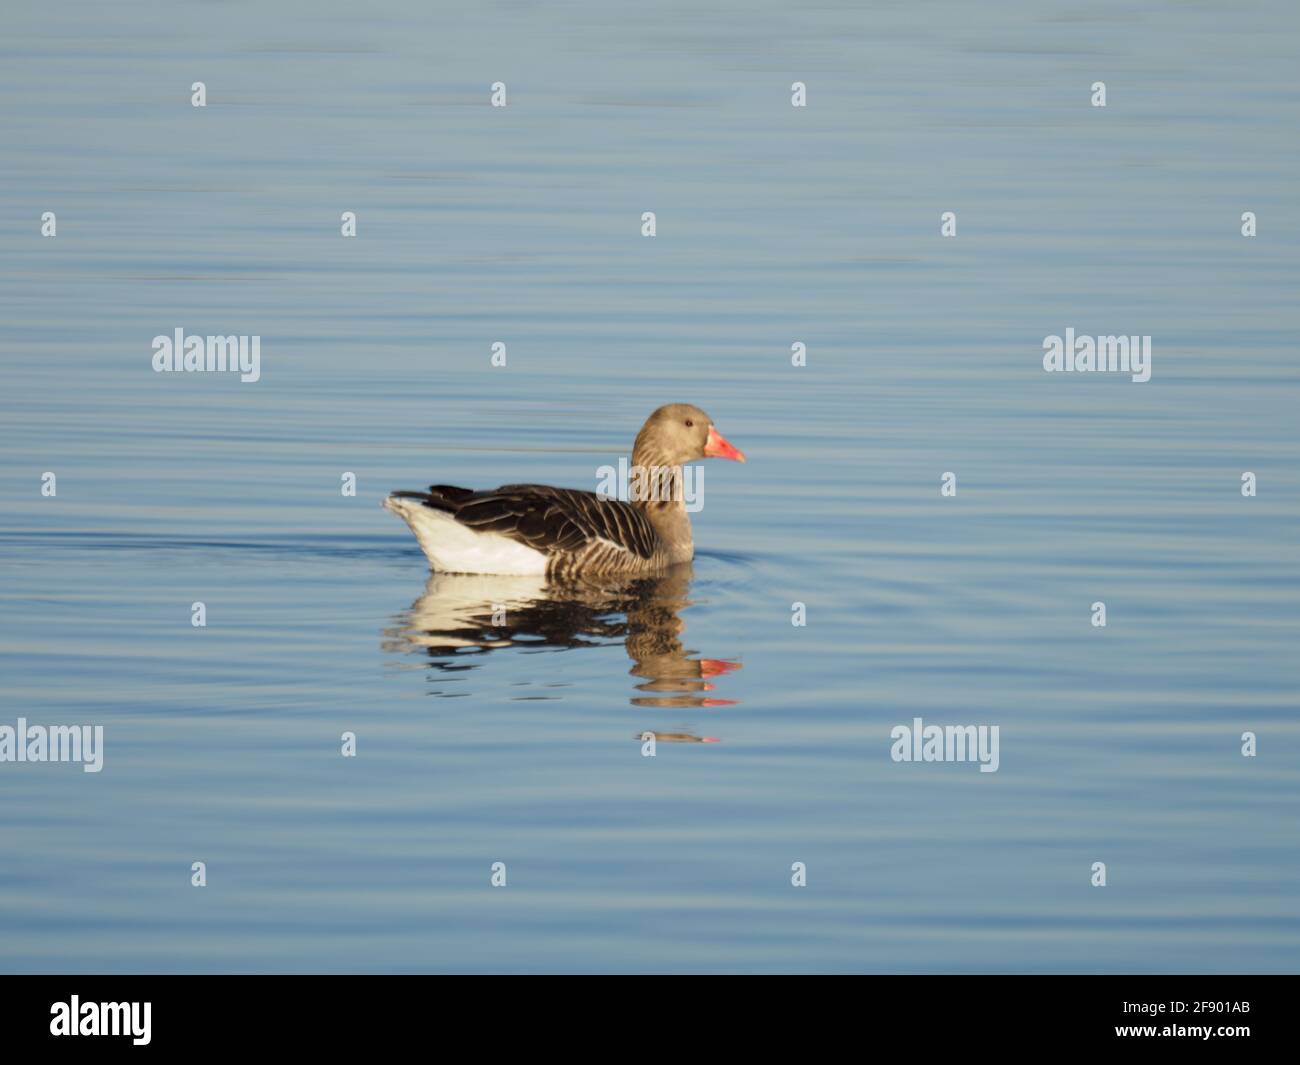 A Greylag Goose (Anser anser) swimming across a calm blue lake. Stock Photo